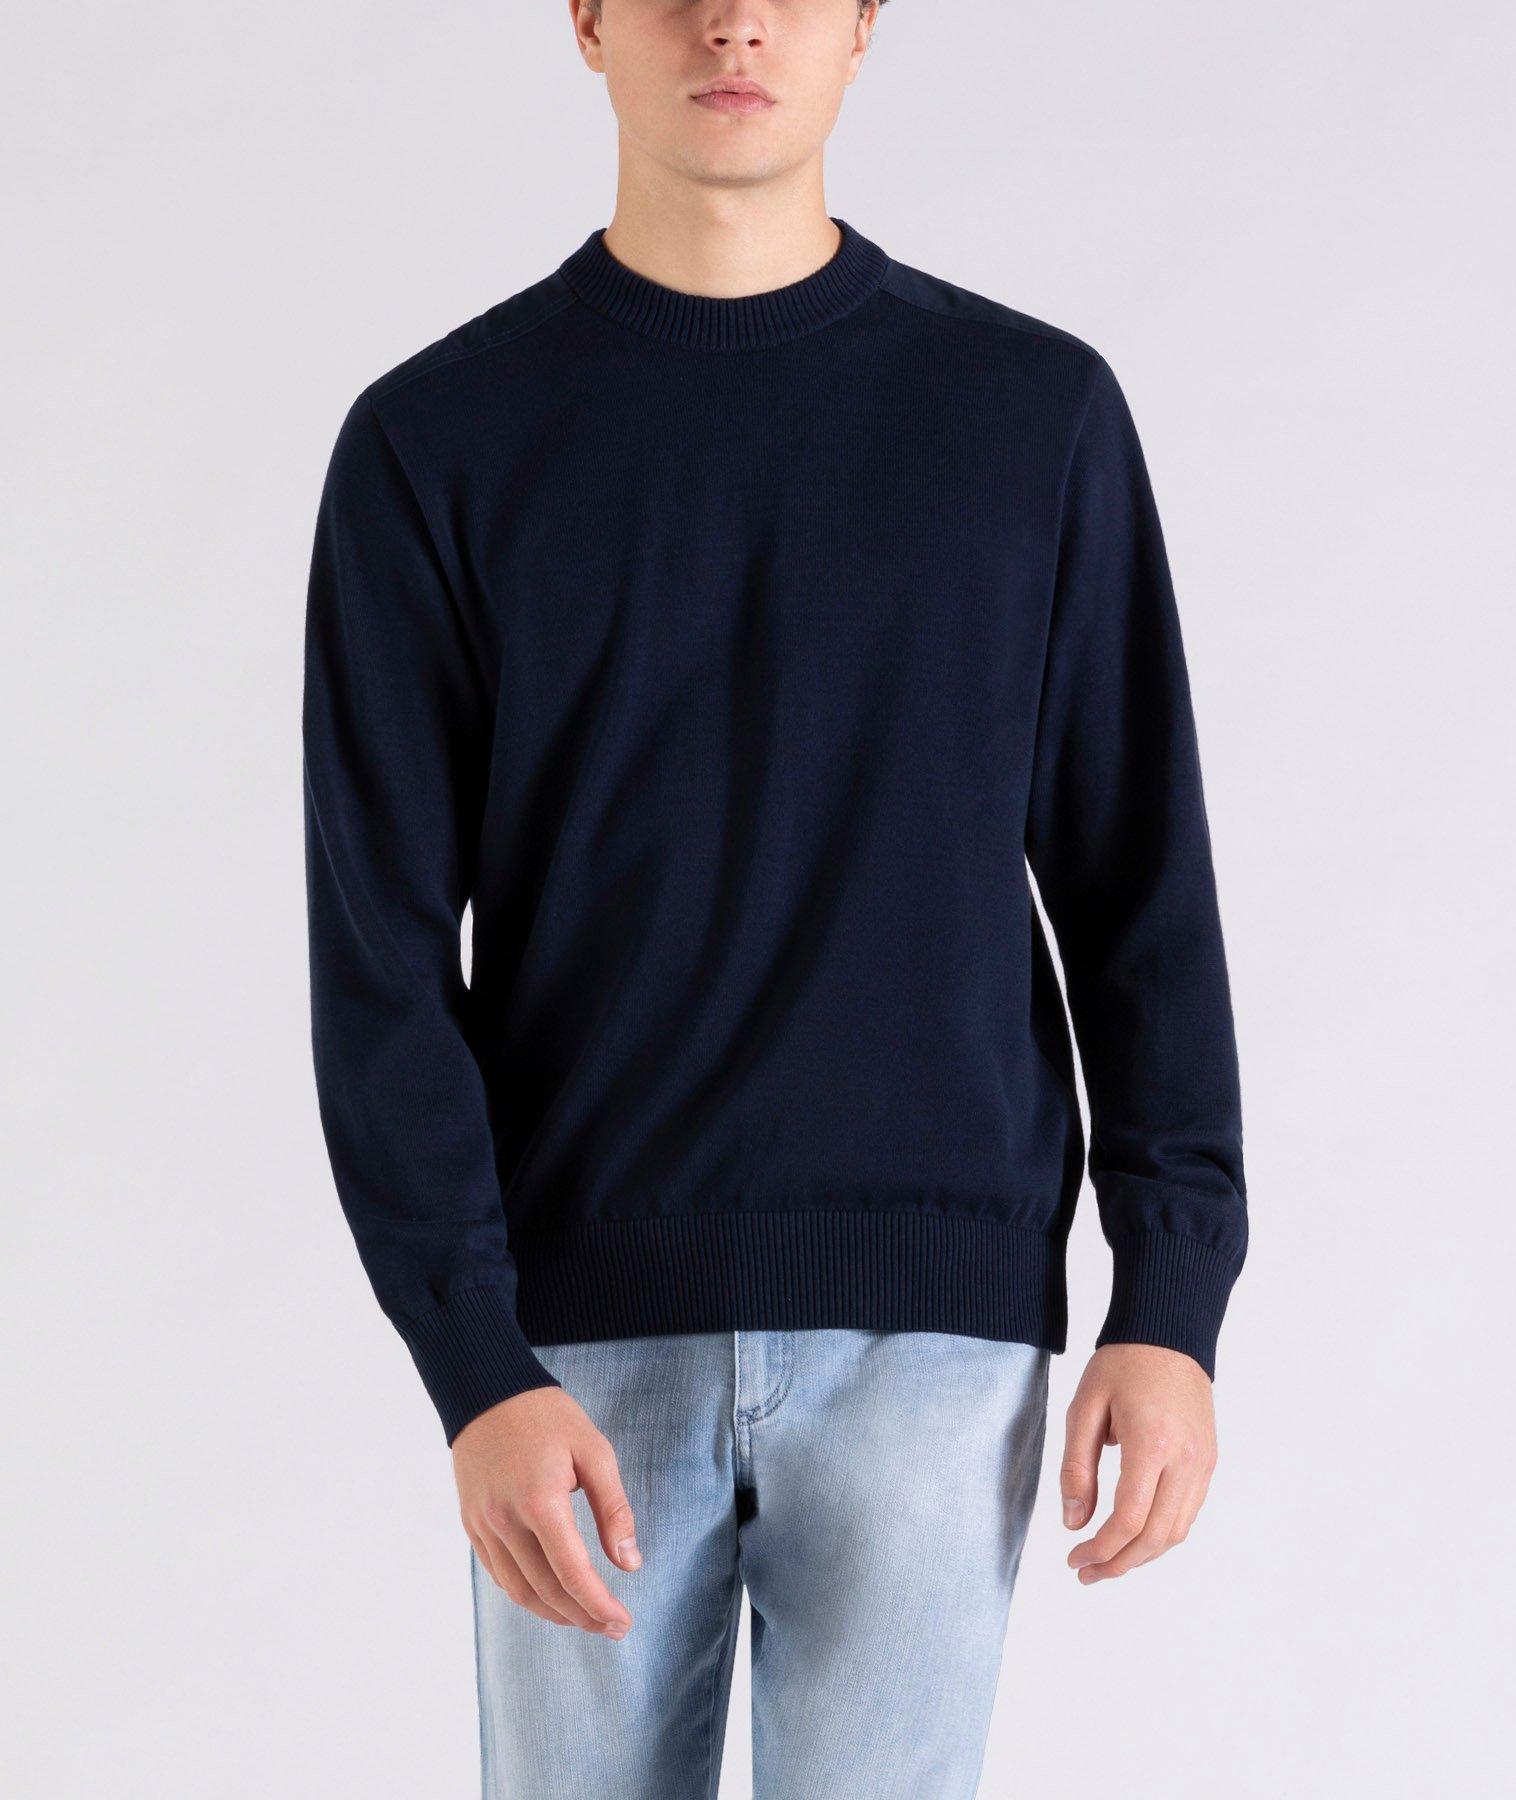 Knit Cotton Sweater image 0